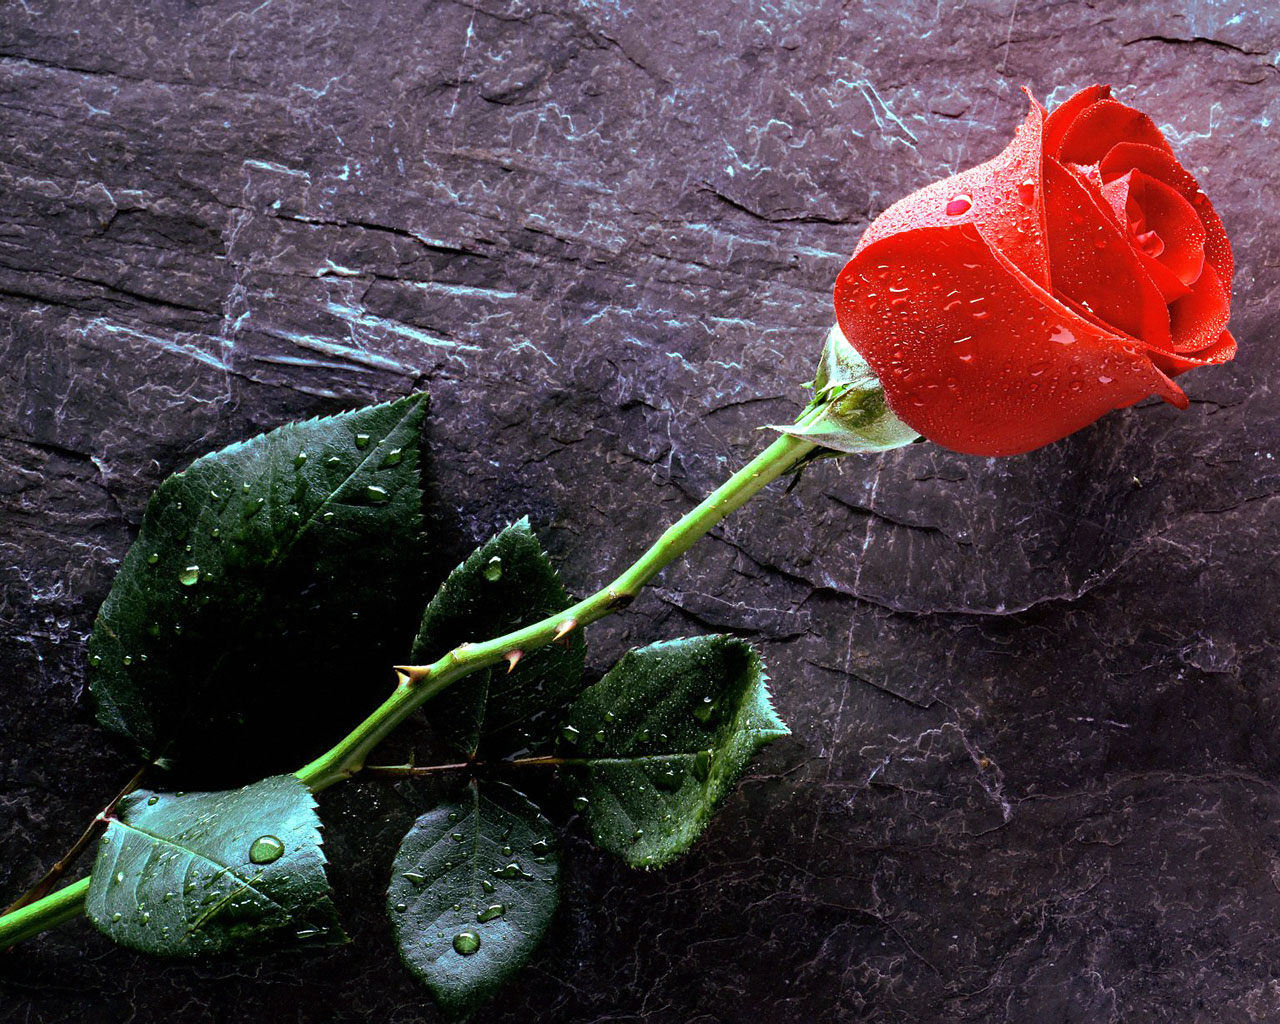 http://4.bp.blogspot.com/--29B7qBBEQo/T3adRfO2xeI/AAAAAAAAAFg/wD2CrVlMQ3U/s1600/True-Love-Forever-Red-Rose-Wallpaper.jpg